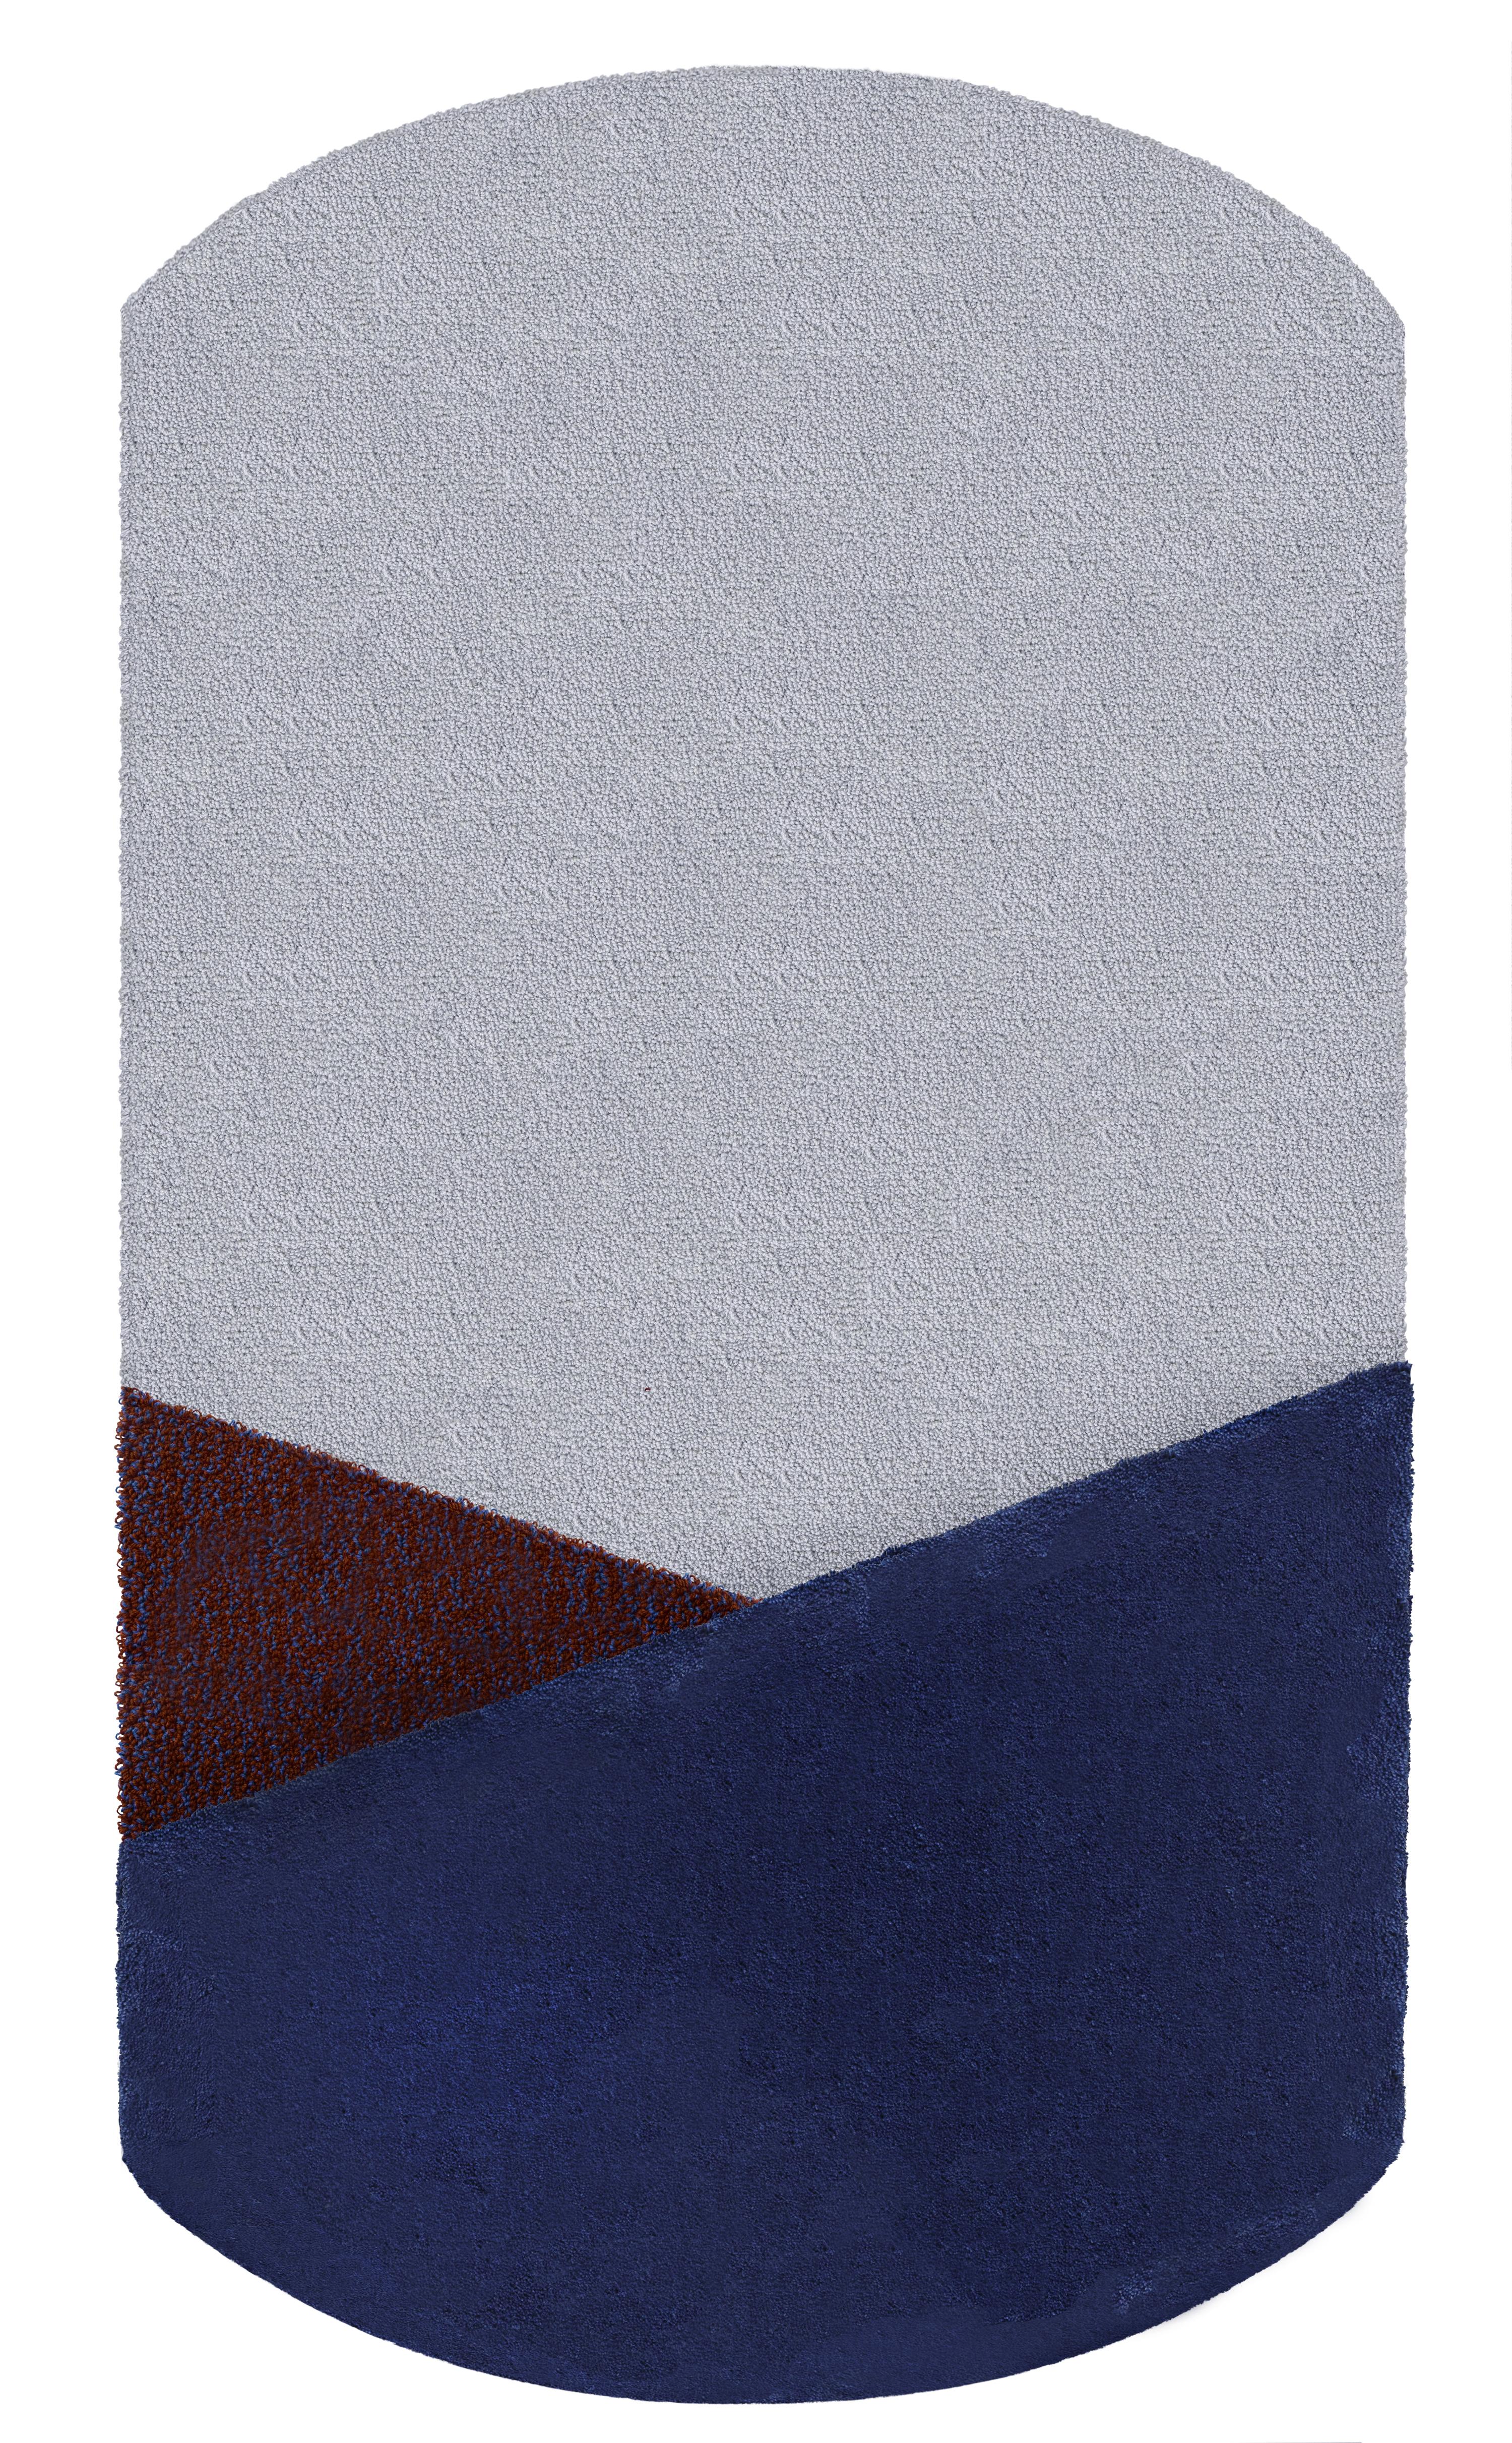 Small Blue Oci Triptych Rug by Seraina Lareida 2